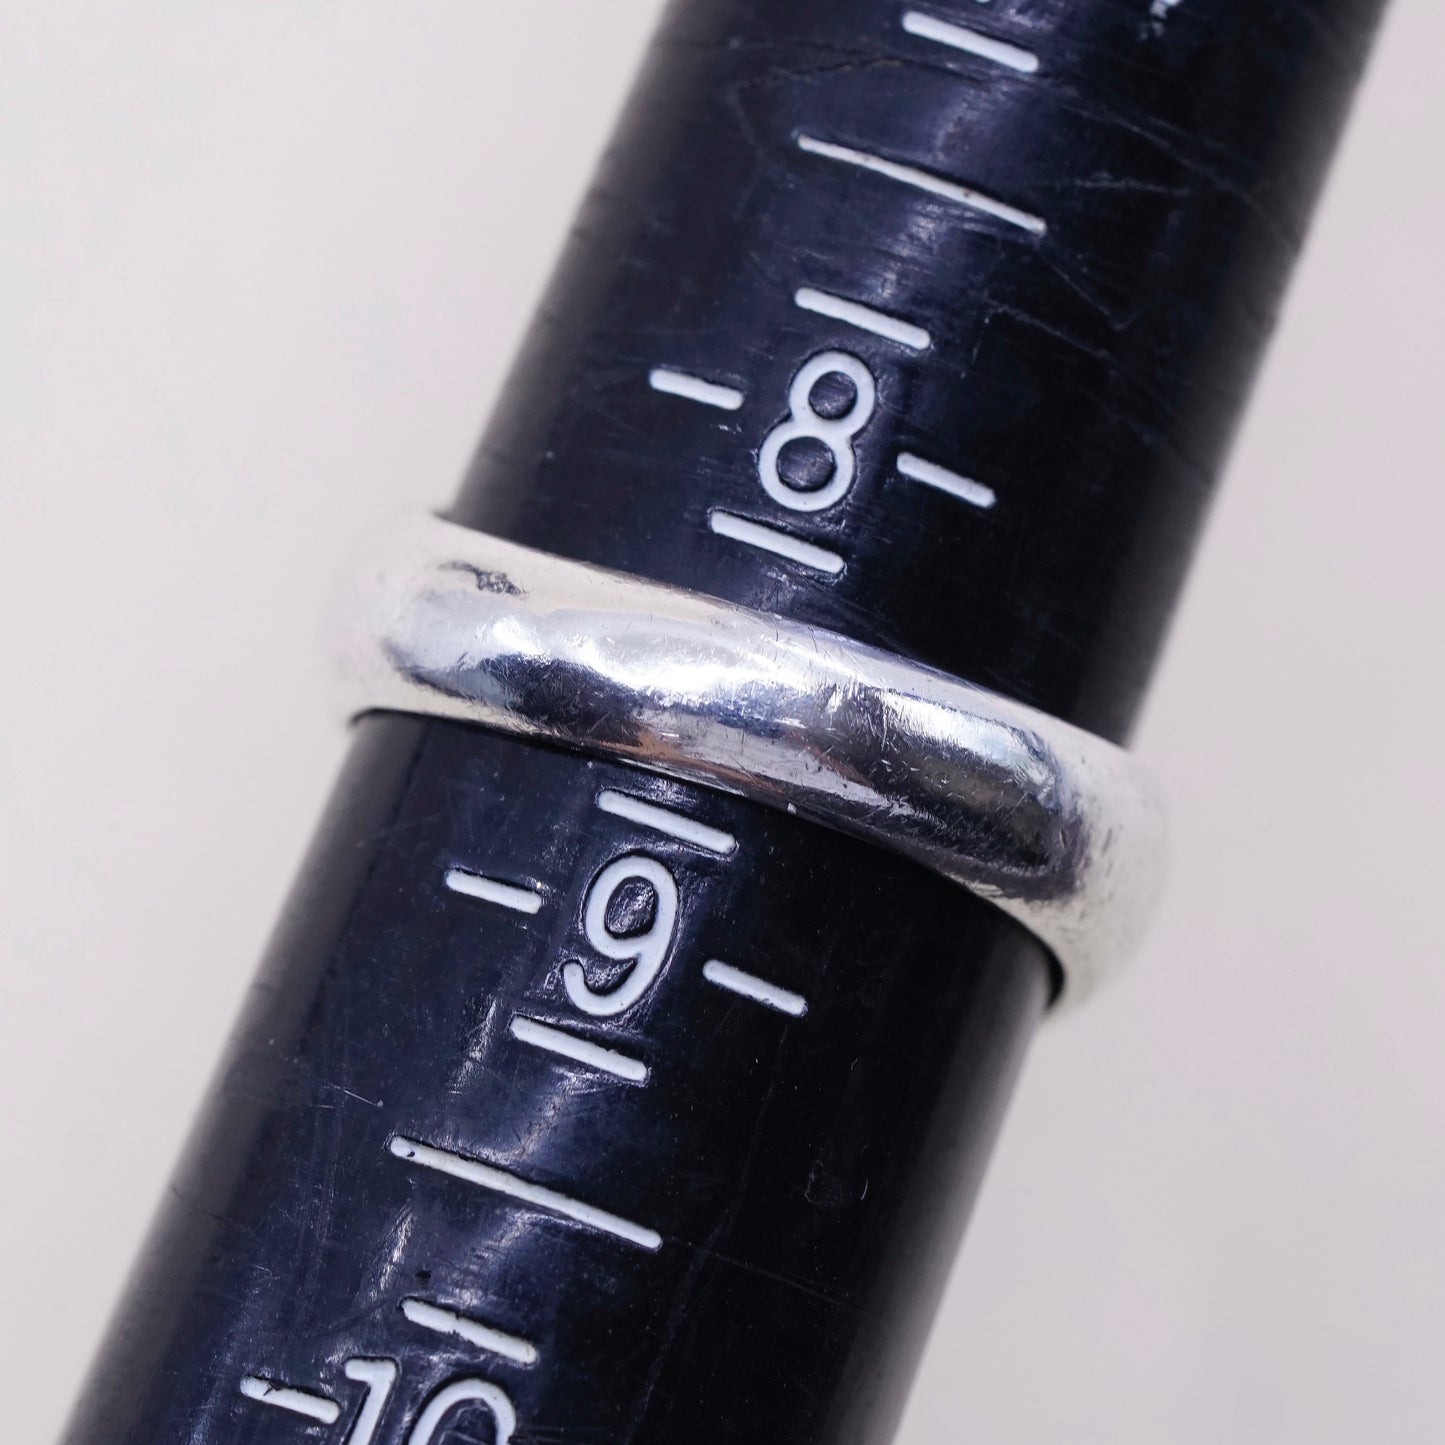 sz 8.5, vtg Sterling silver handmade ring, modern 925 band w//th pearl